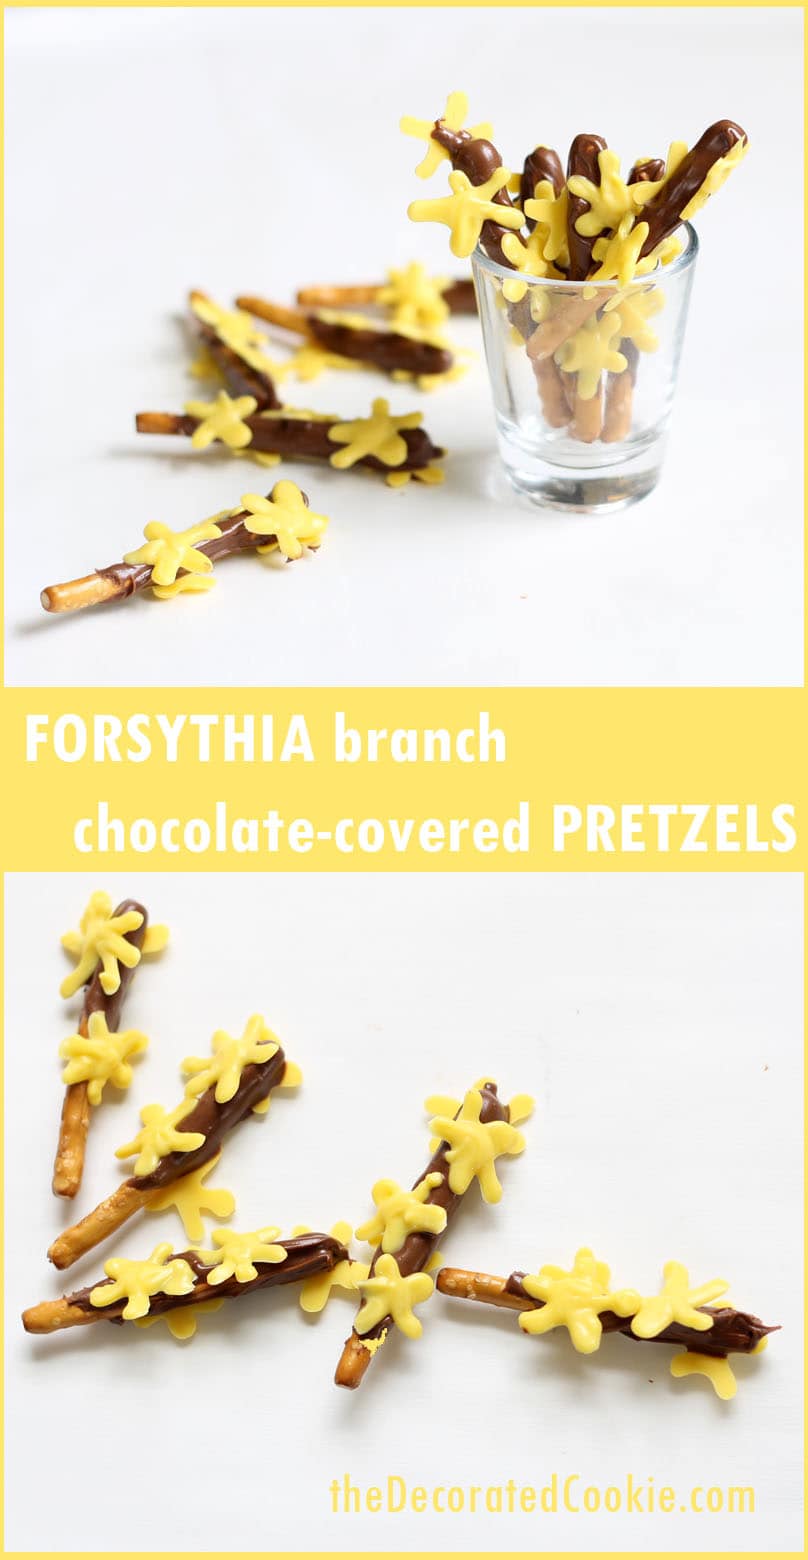 Forsythia branch chocolate-covered pretzels 